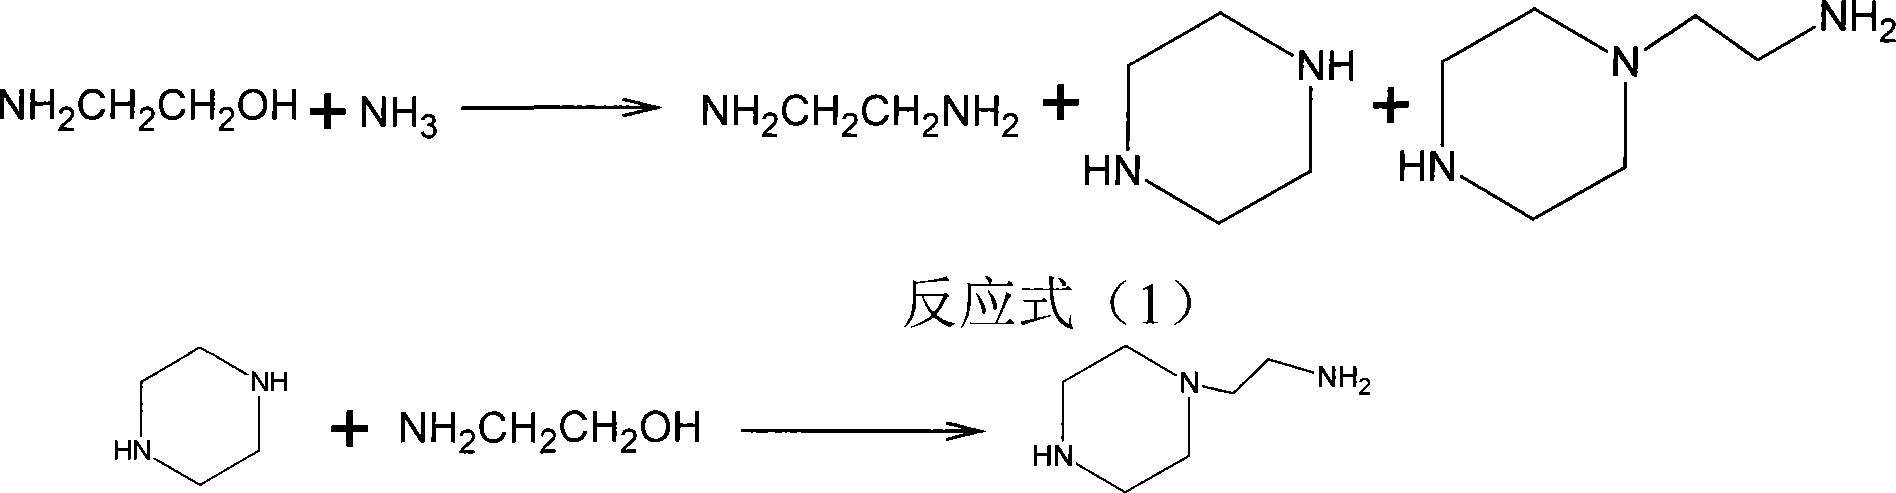 Combined preparation method for ethylene diamine and aminoethylpiperazine